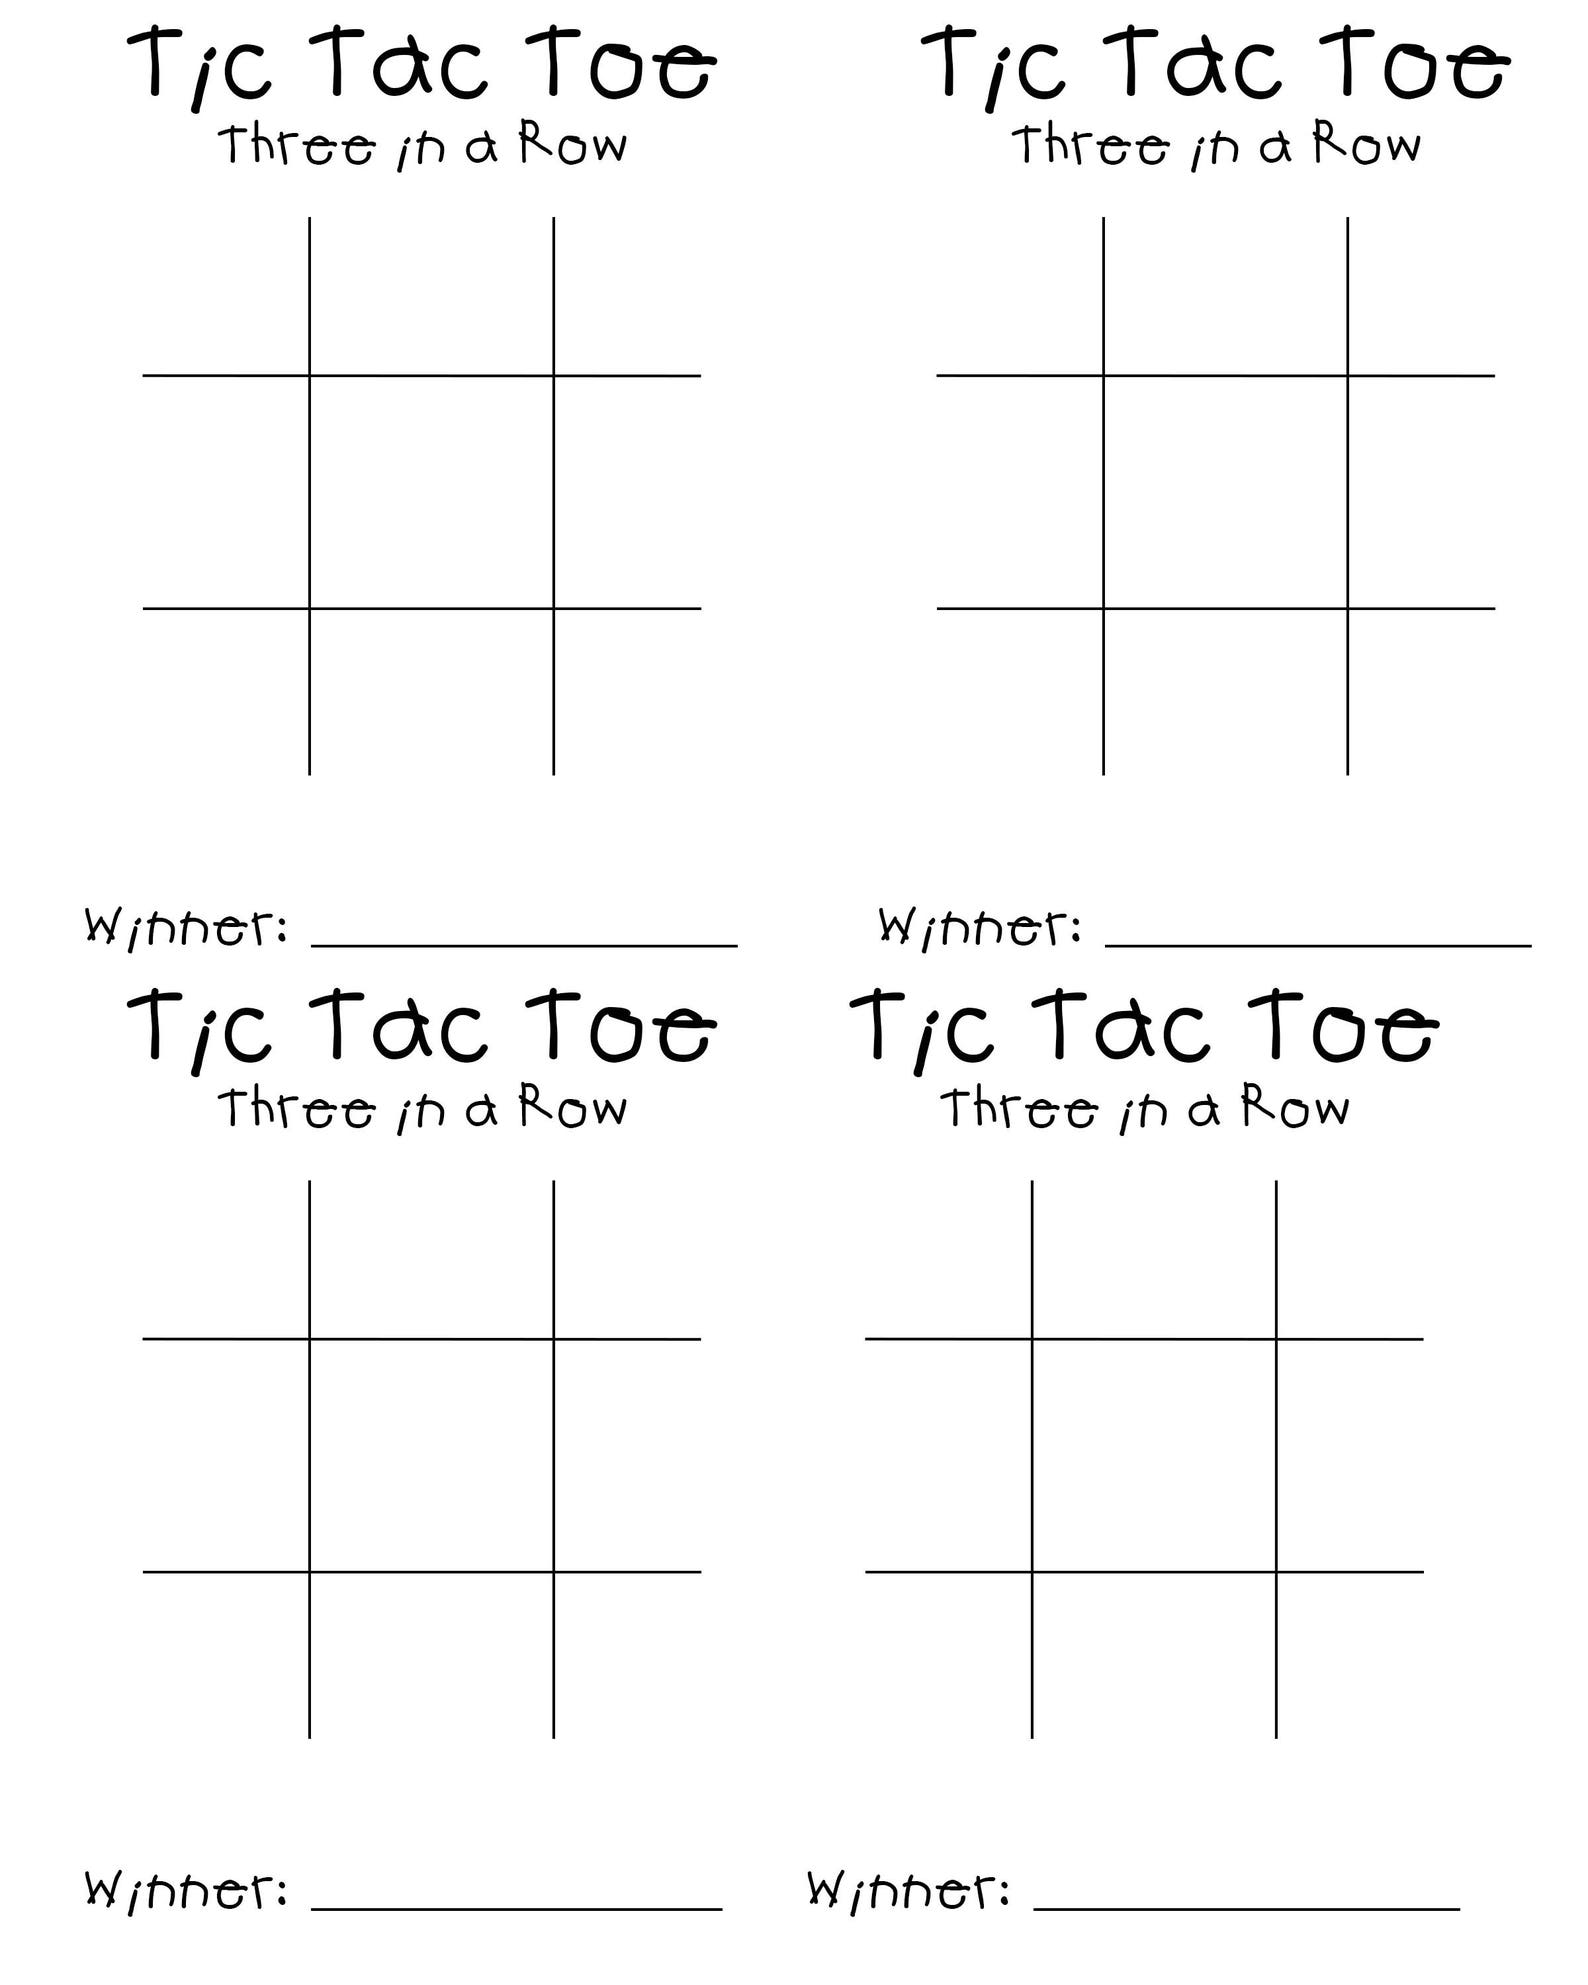 tic-tac-toe-game-sheet-digital-print-8x10-etsy